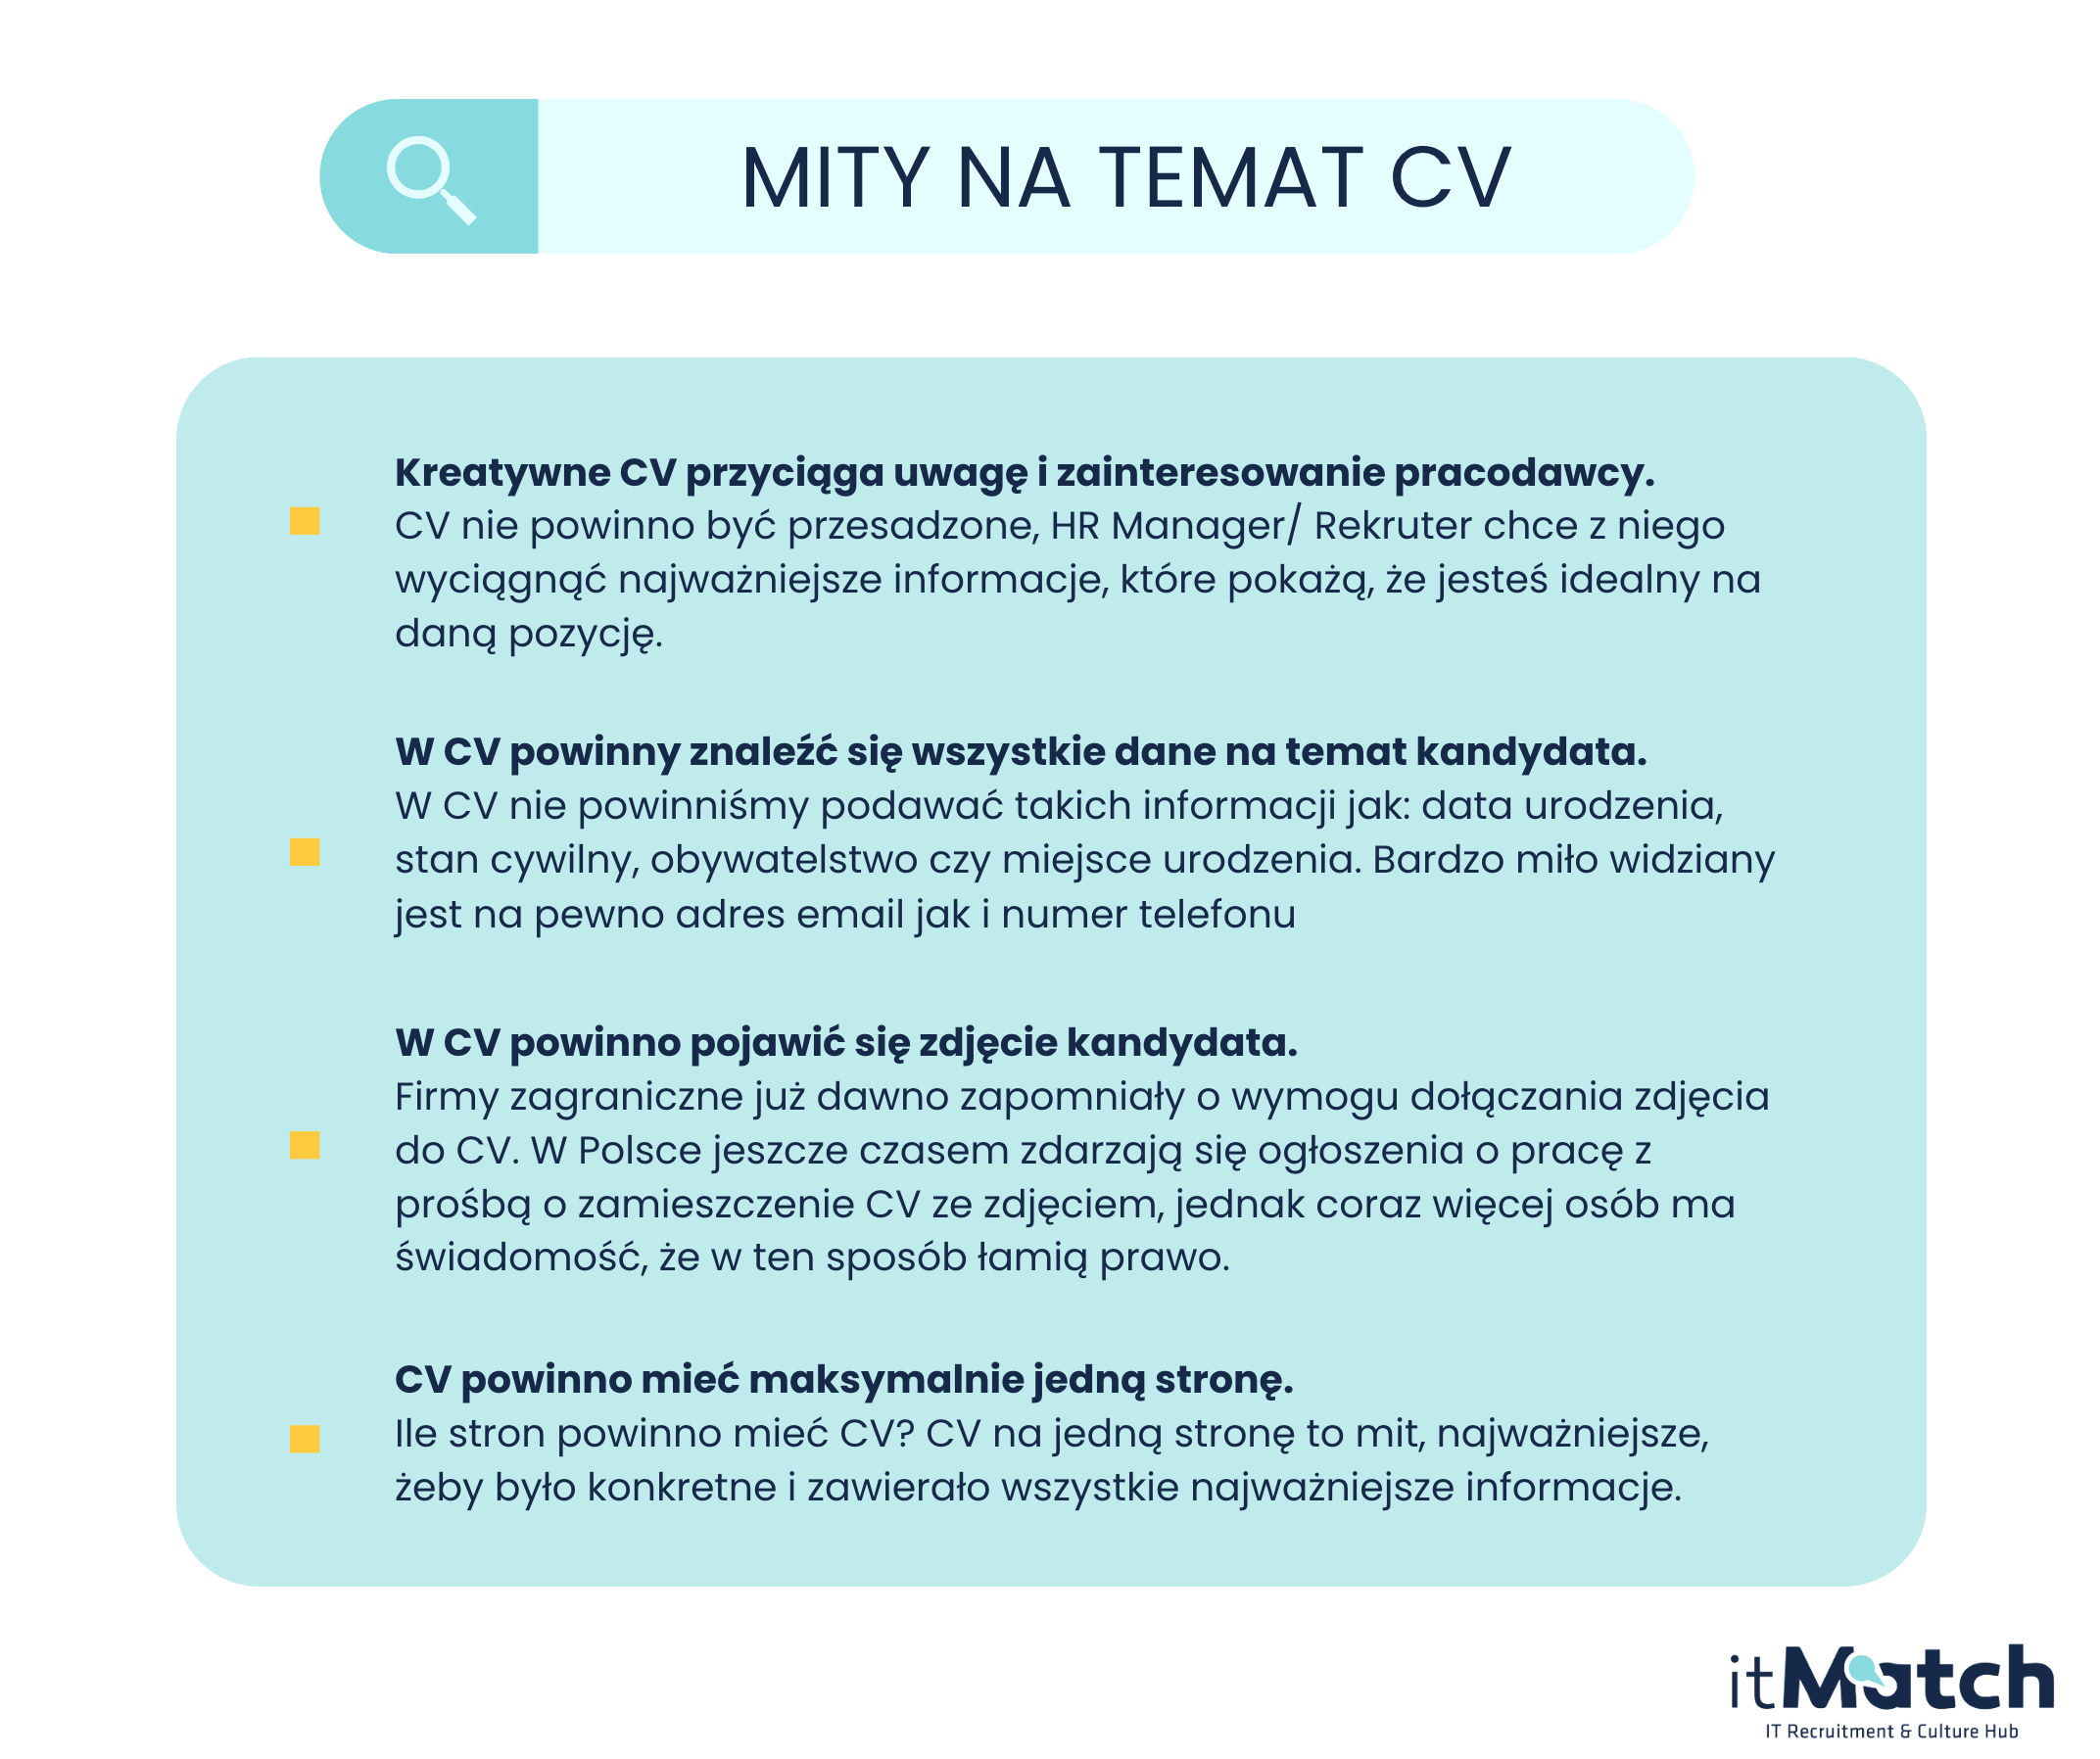 Myths about the CV